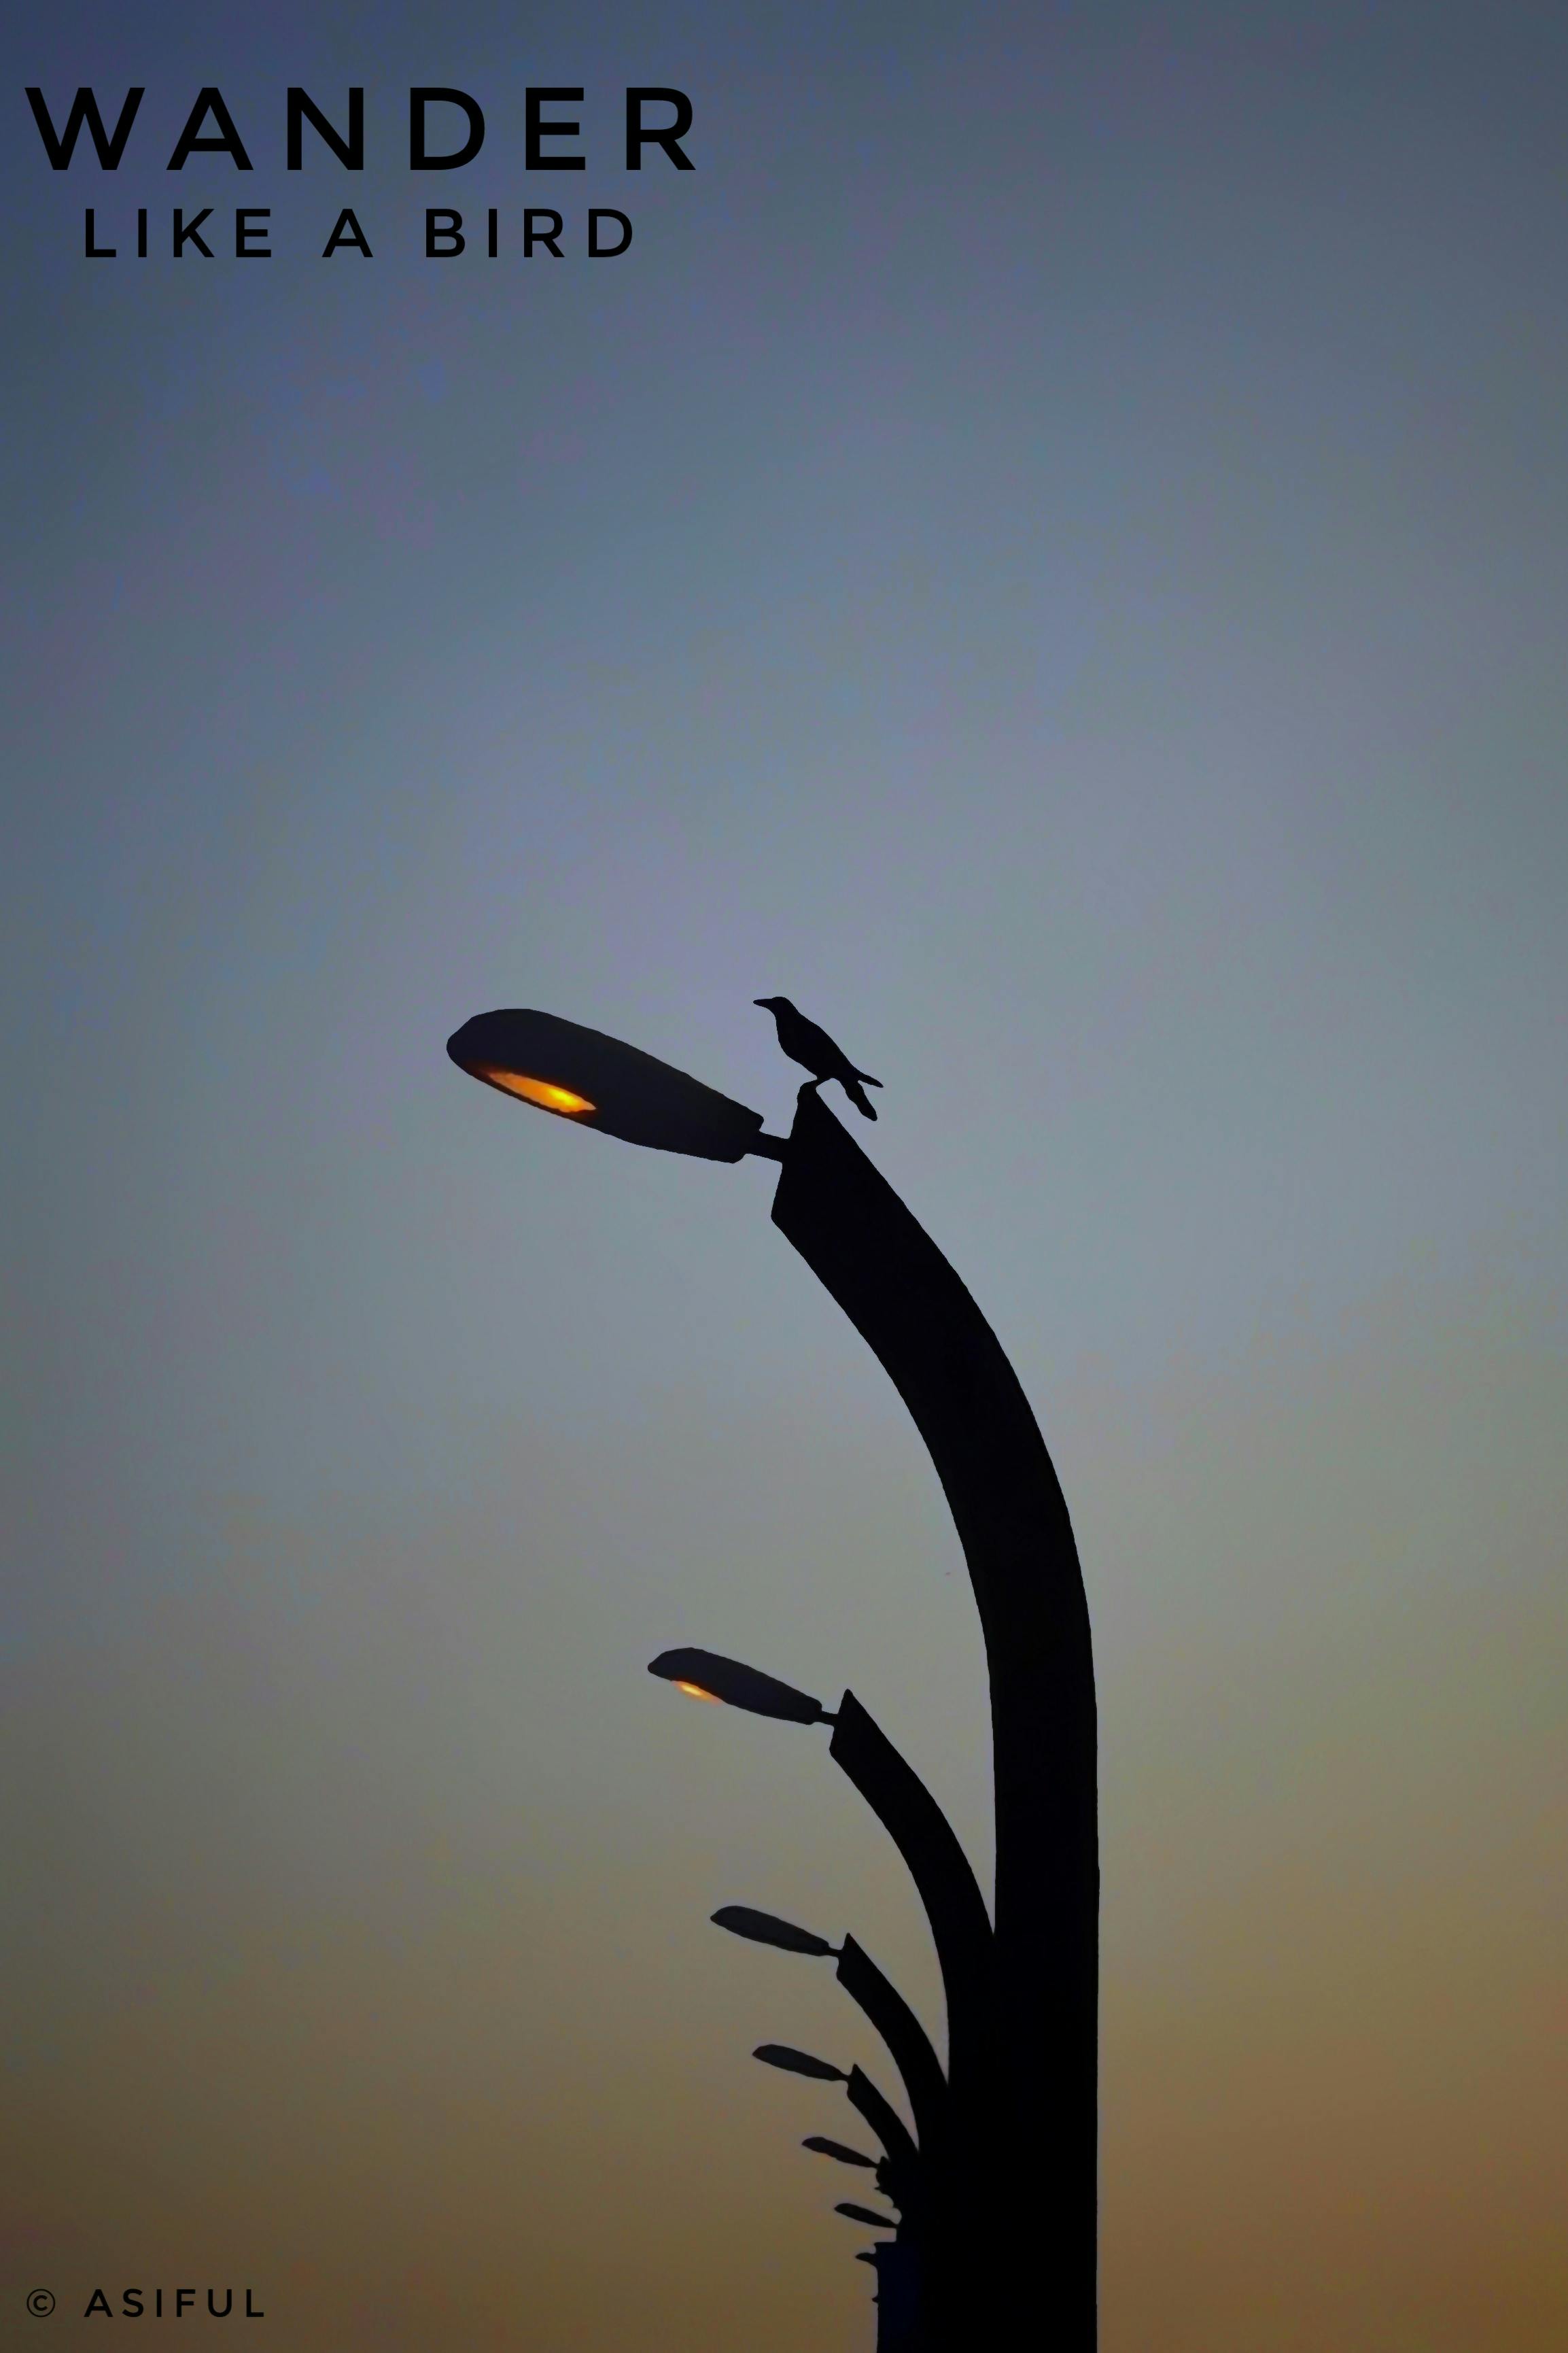 Free stock photo of #photography #bird #wander #sunset #life #walpaper